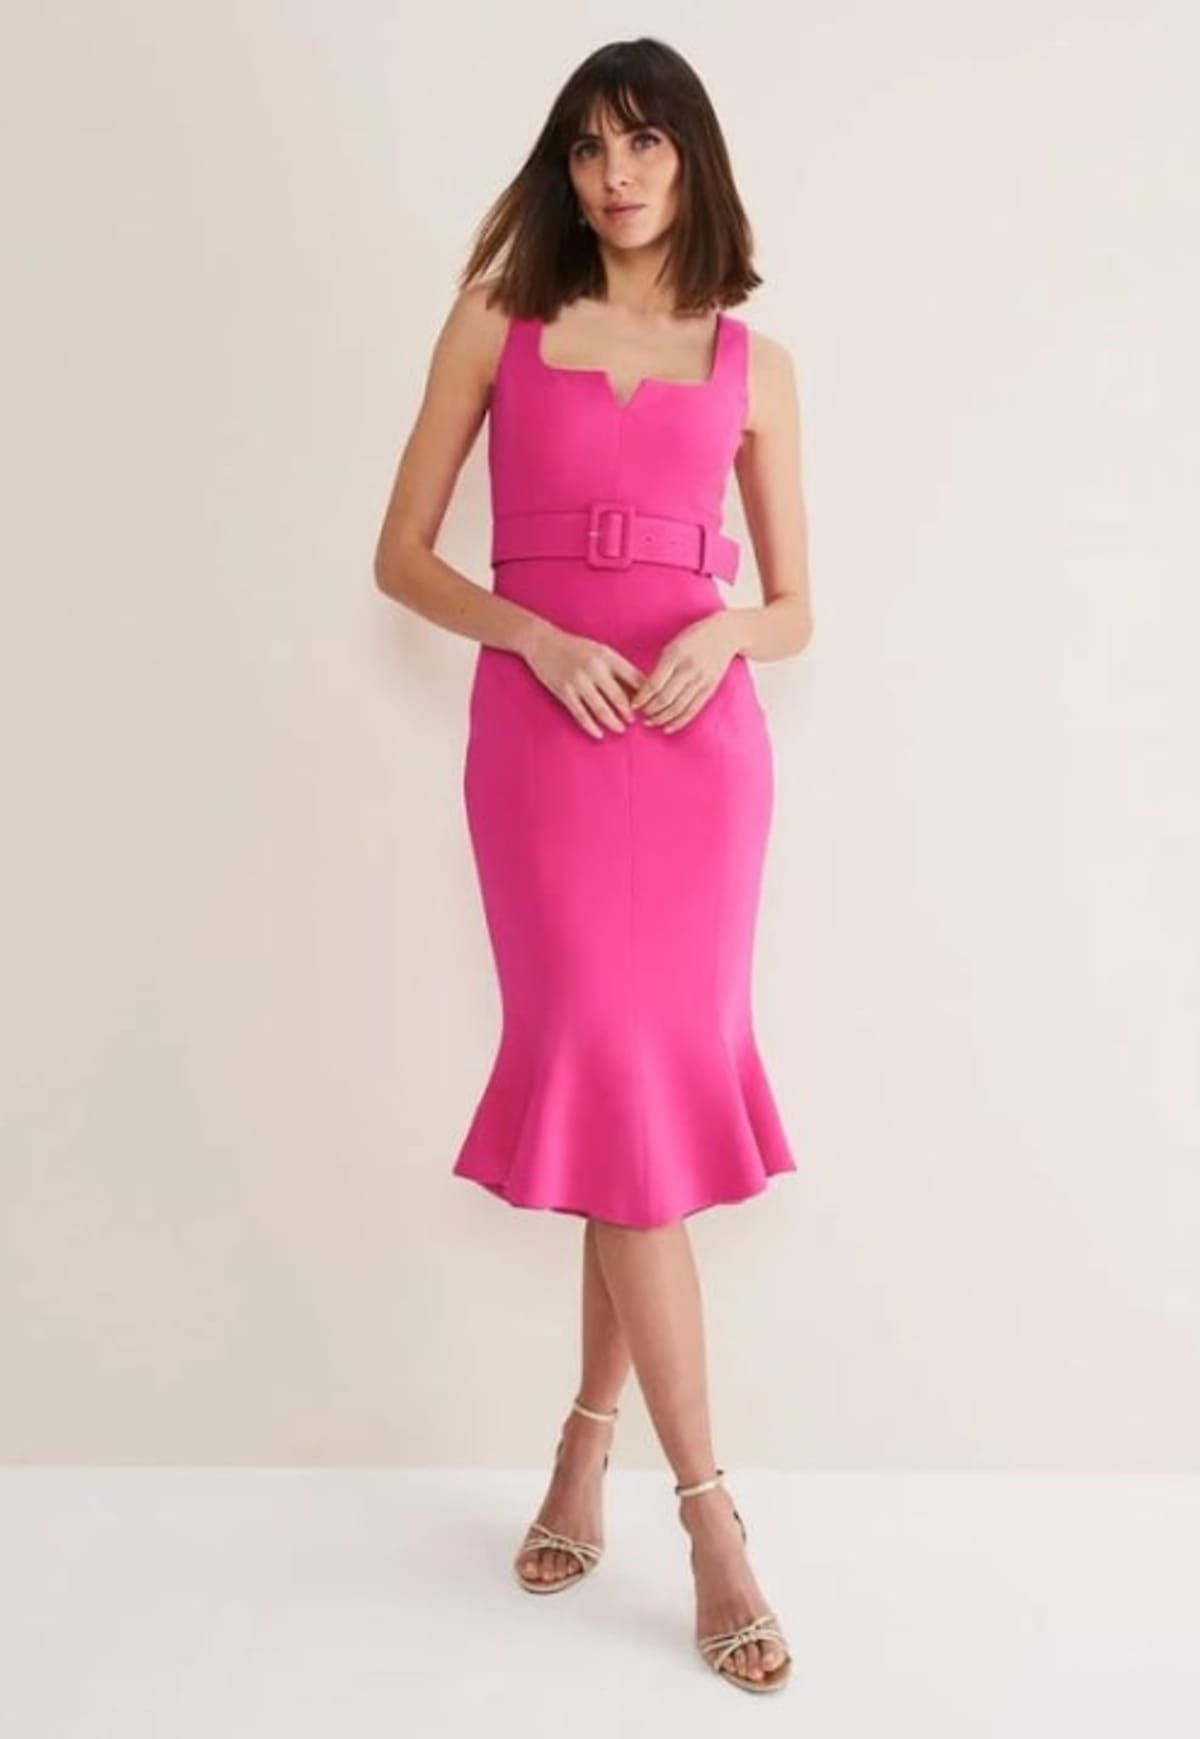 Woman wearing pink suit dress